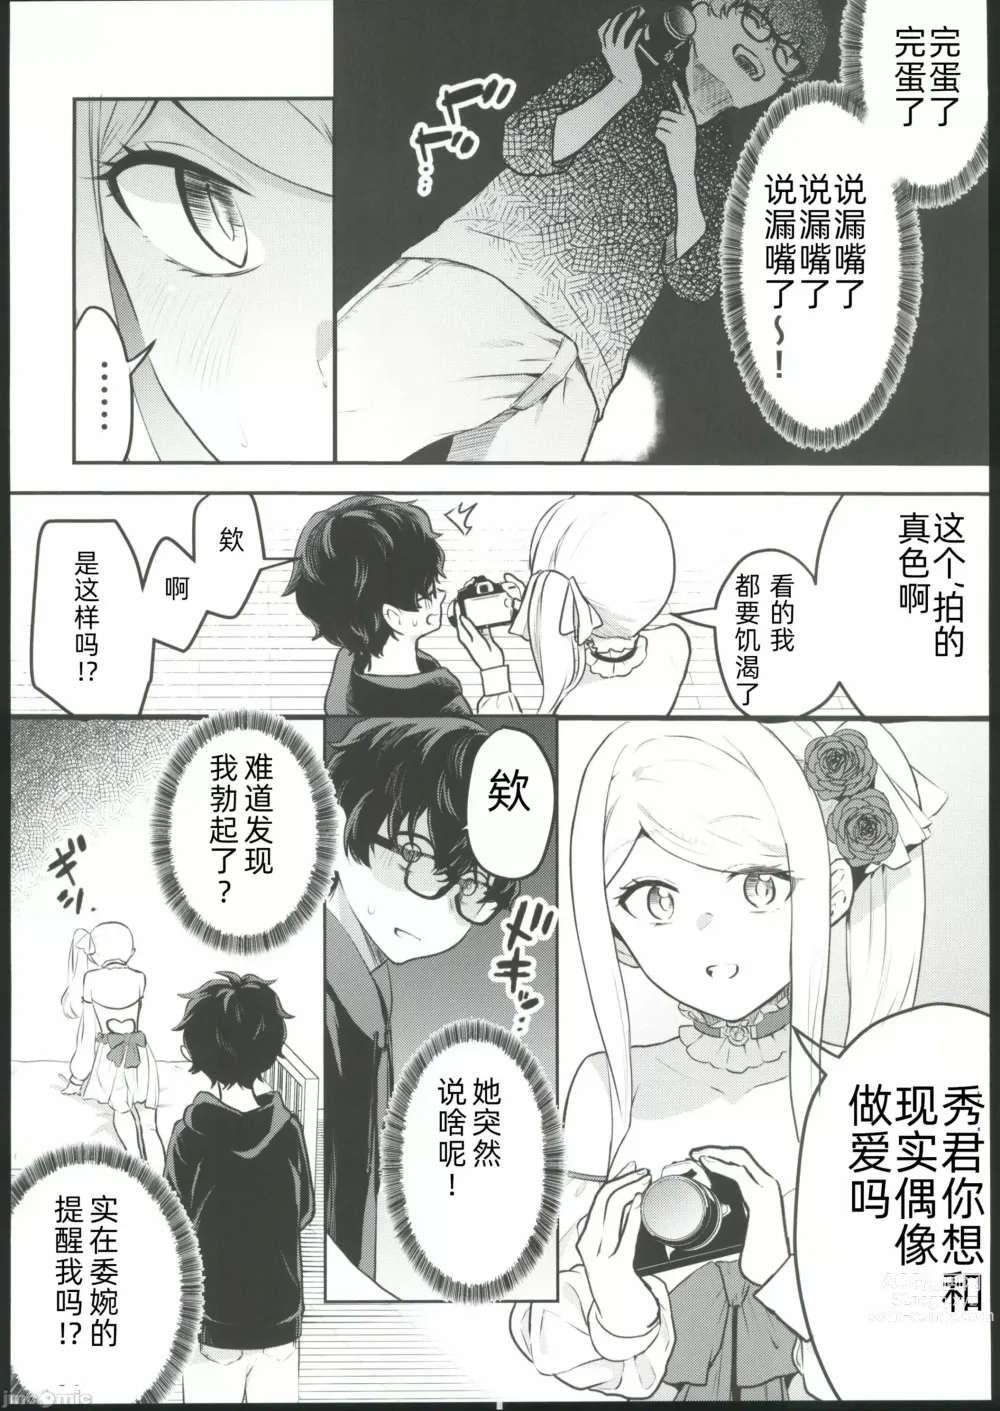 Page 9 of doujinshi cosplay女孩与亲密接触摄影会